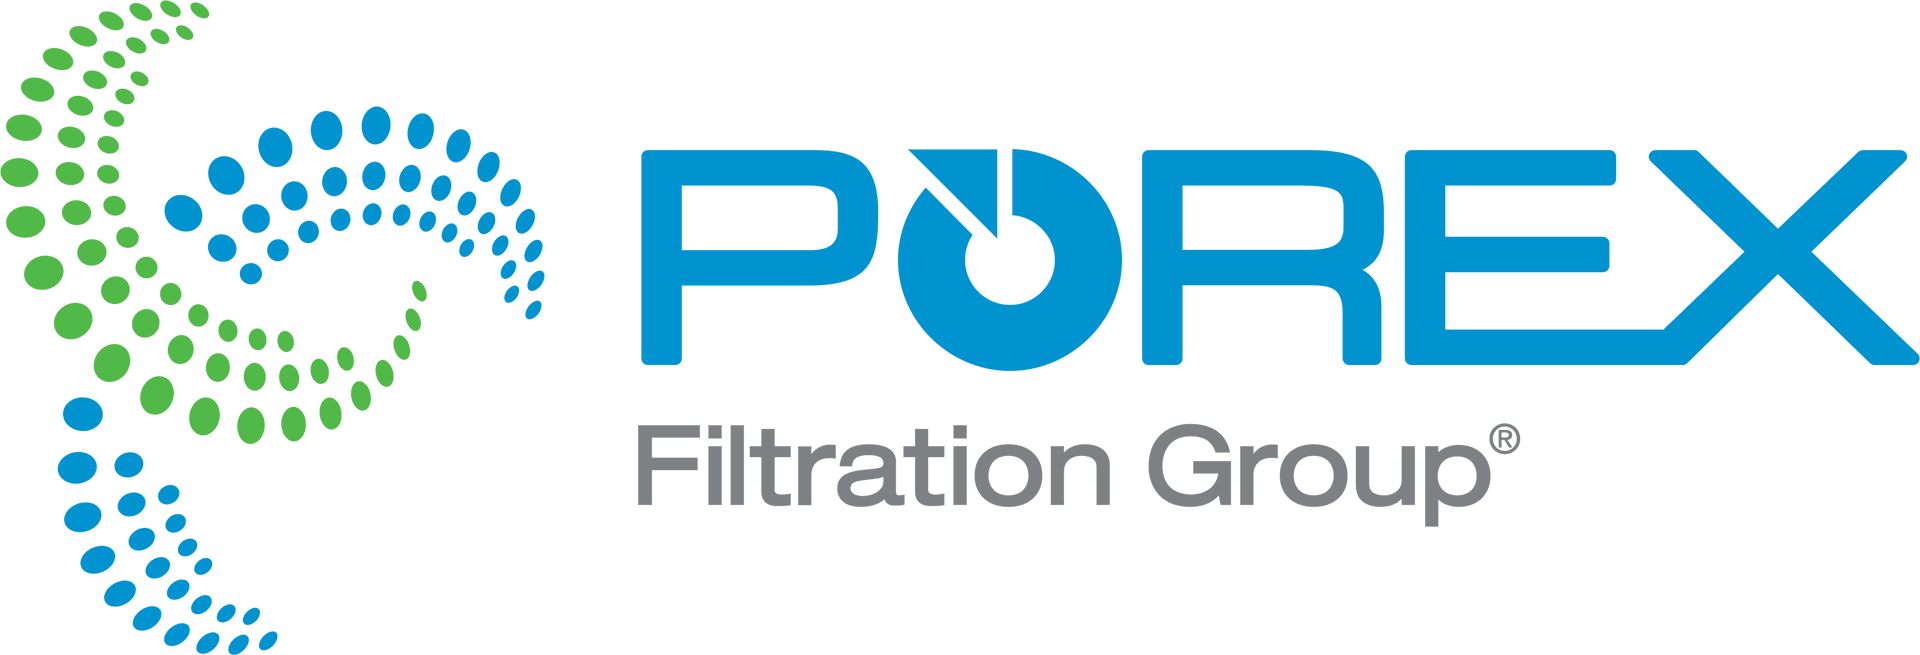 Porex Filtration Group